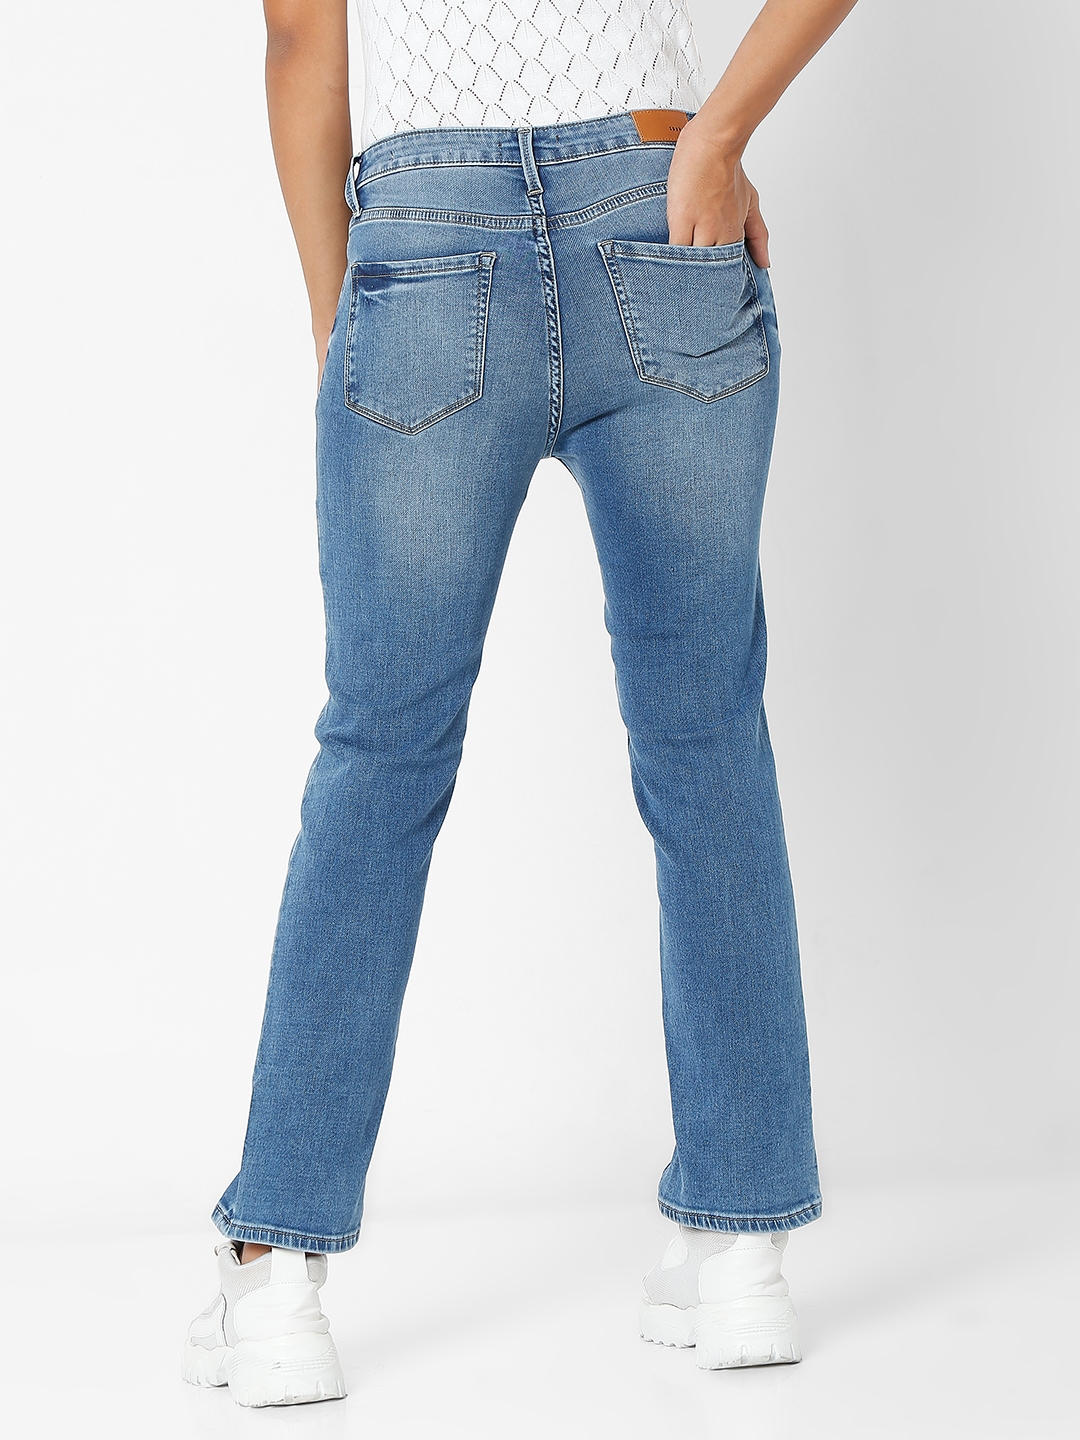 spykar | Women's Blue Cotton Solid Slim Jeans 3